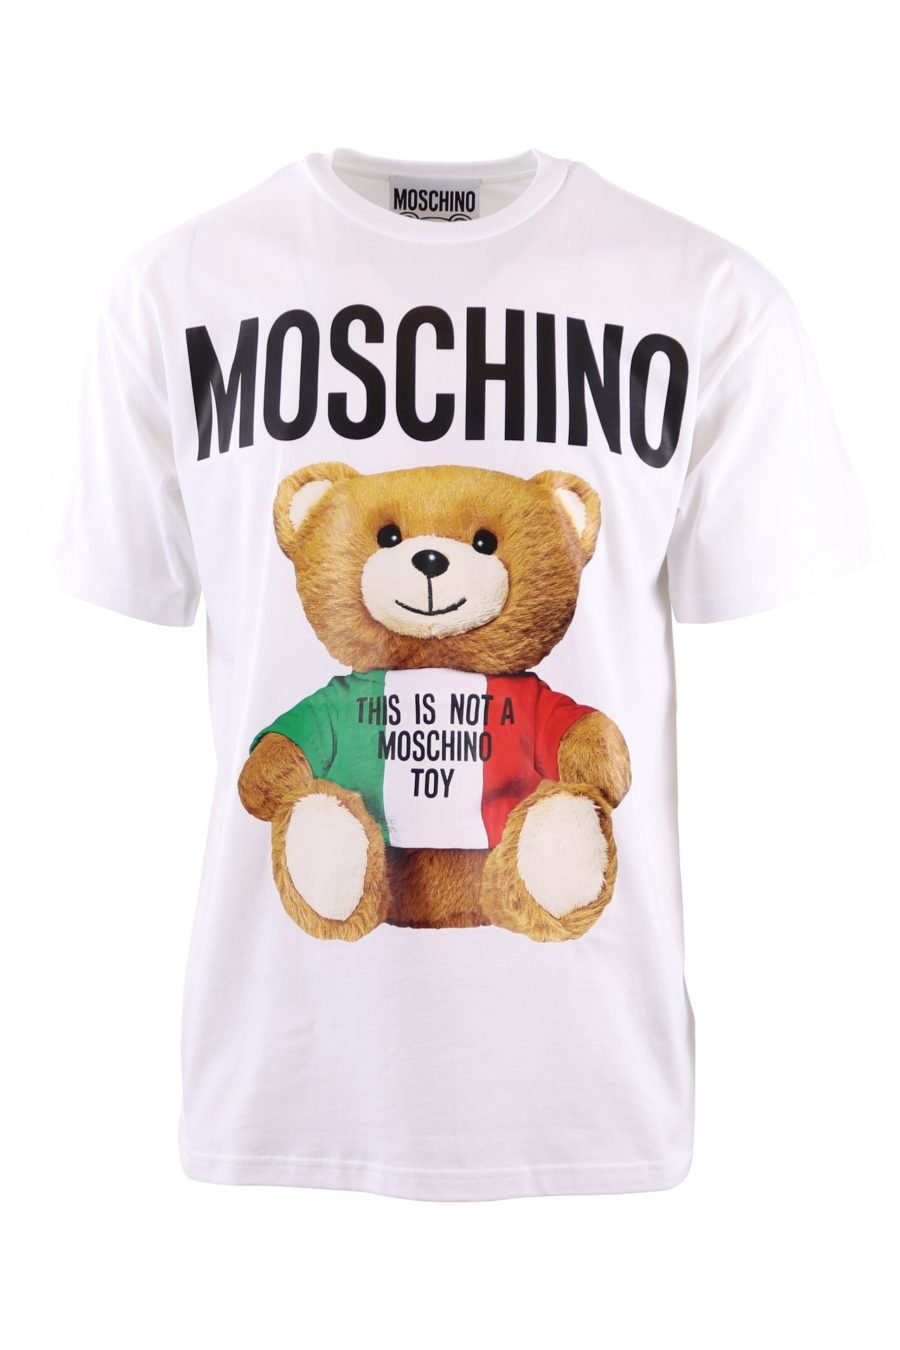 Moschino Couture weißes T-Shirt in Übergröße mit großem Bär - bc685390dd4534e751af4e4b5cb56dcd1c567e1a